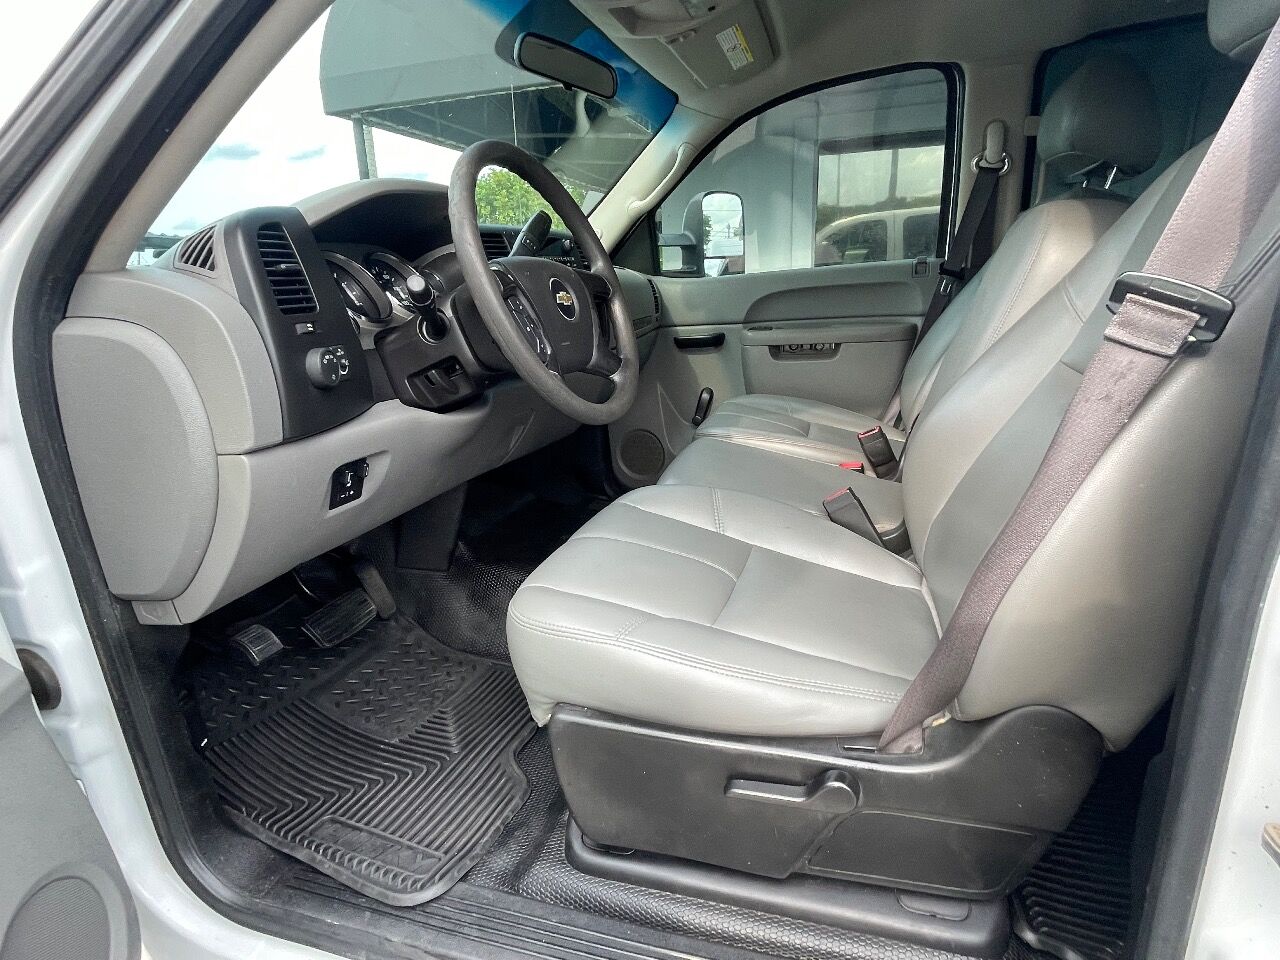 2013 Chevrolet Silverado Pickup - $29,900